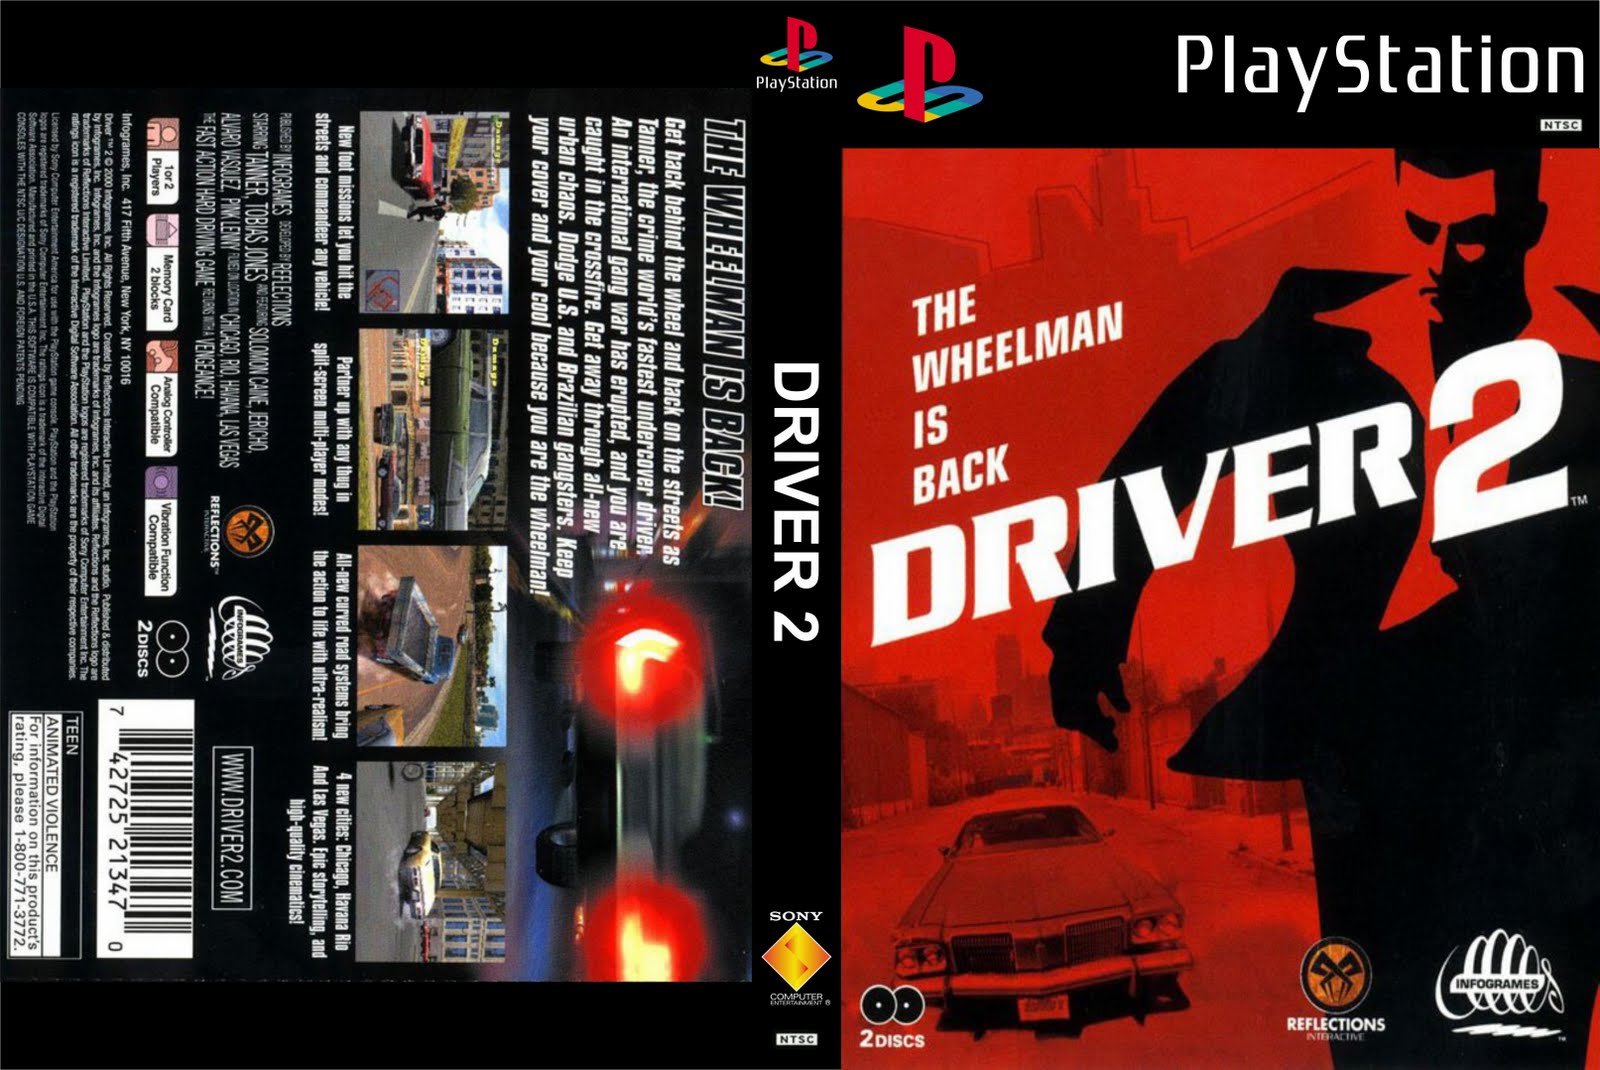 Драйвер пс3. Driver 2 Sony PLAYSTATION. PLAYSTATION 1 Driver 2. Driver 2 ps1 Cover. Драйвер 2 на ps1.